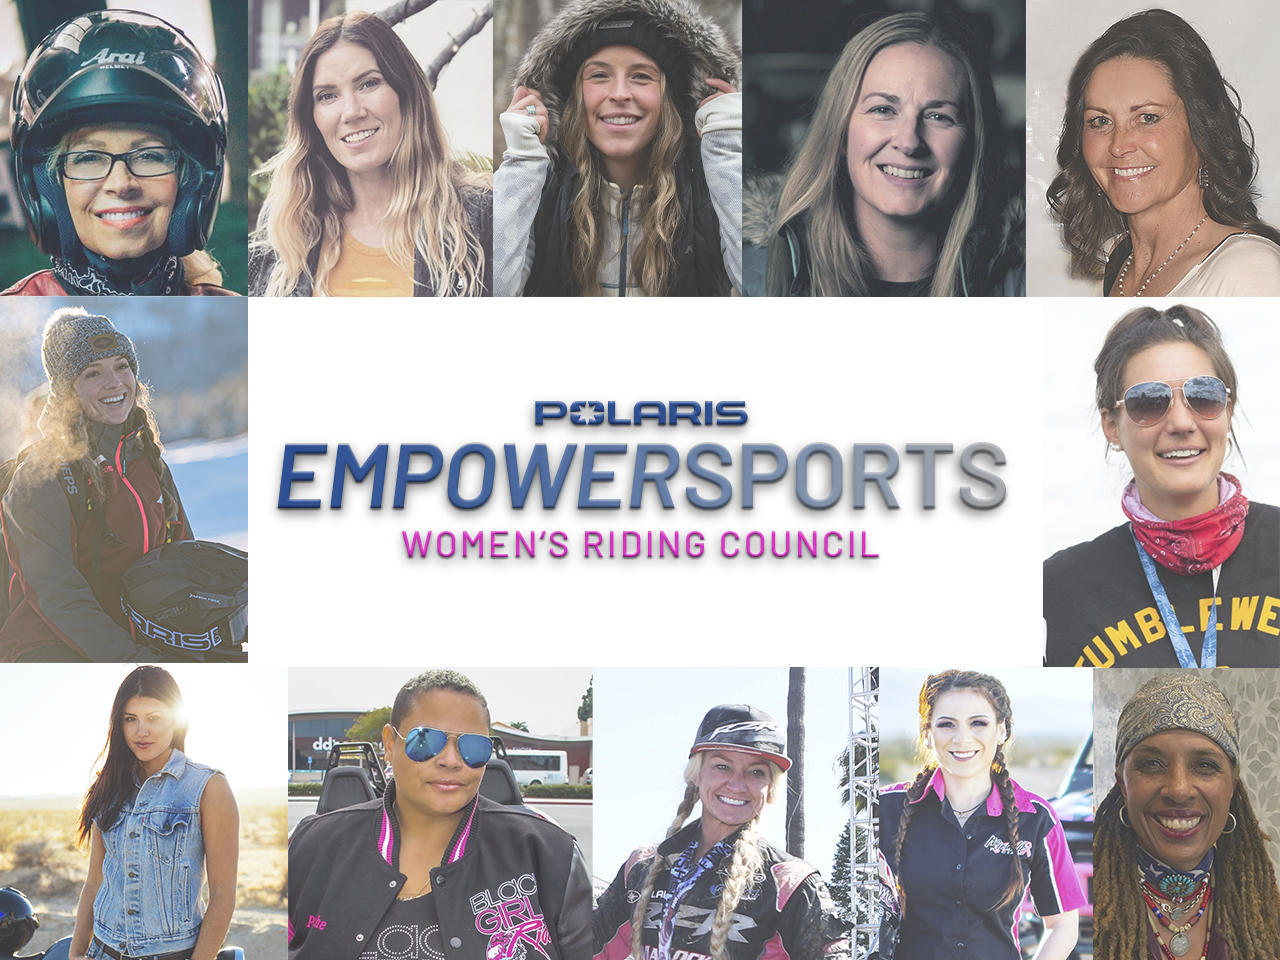 Polaris Empowersports Women's Riding Council